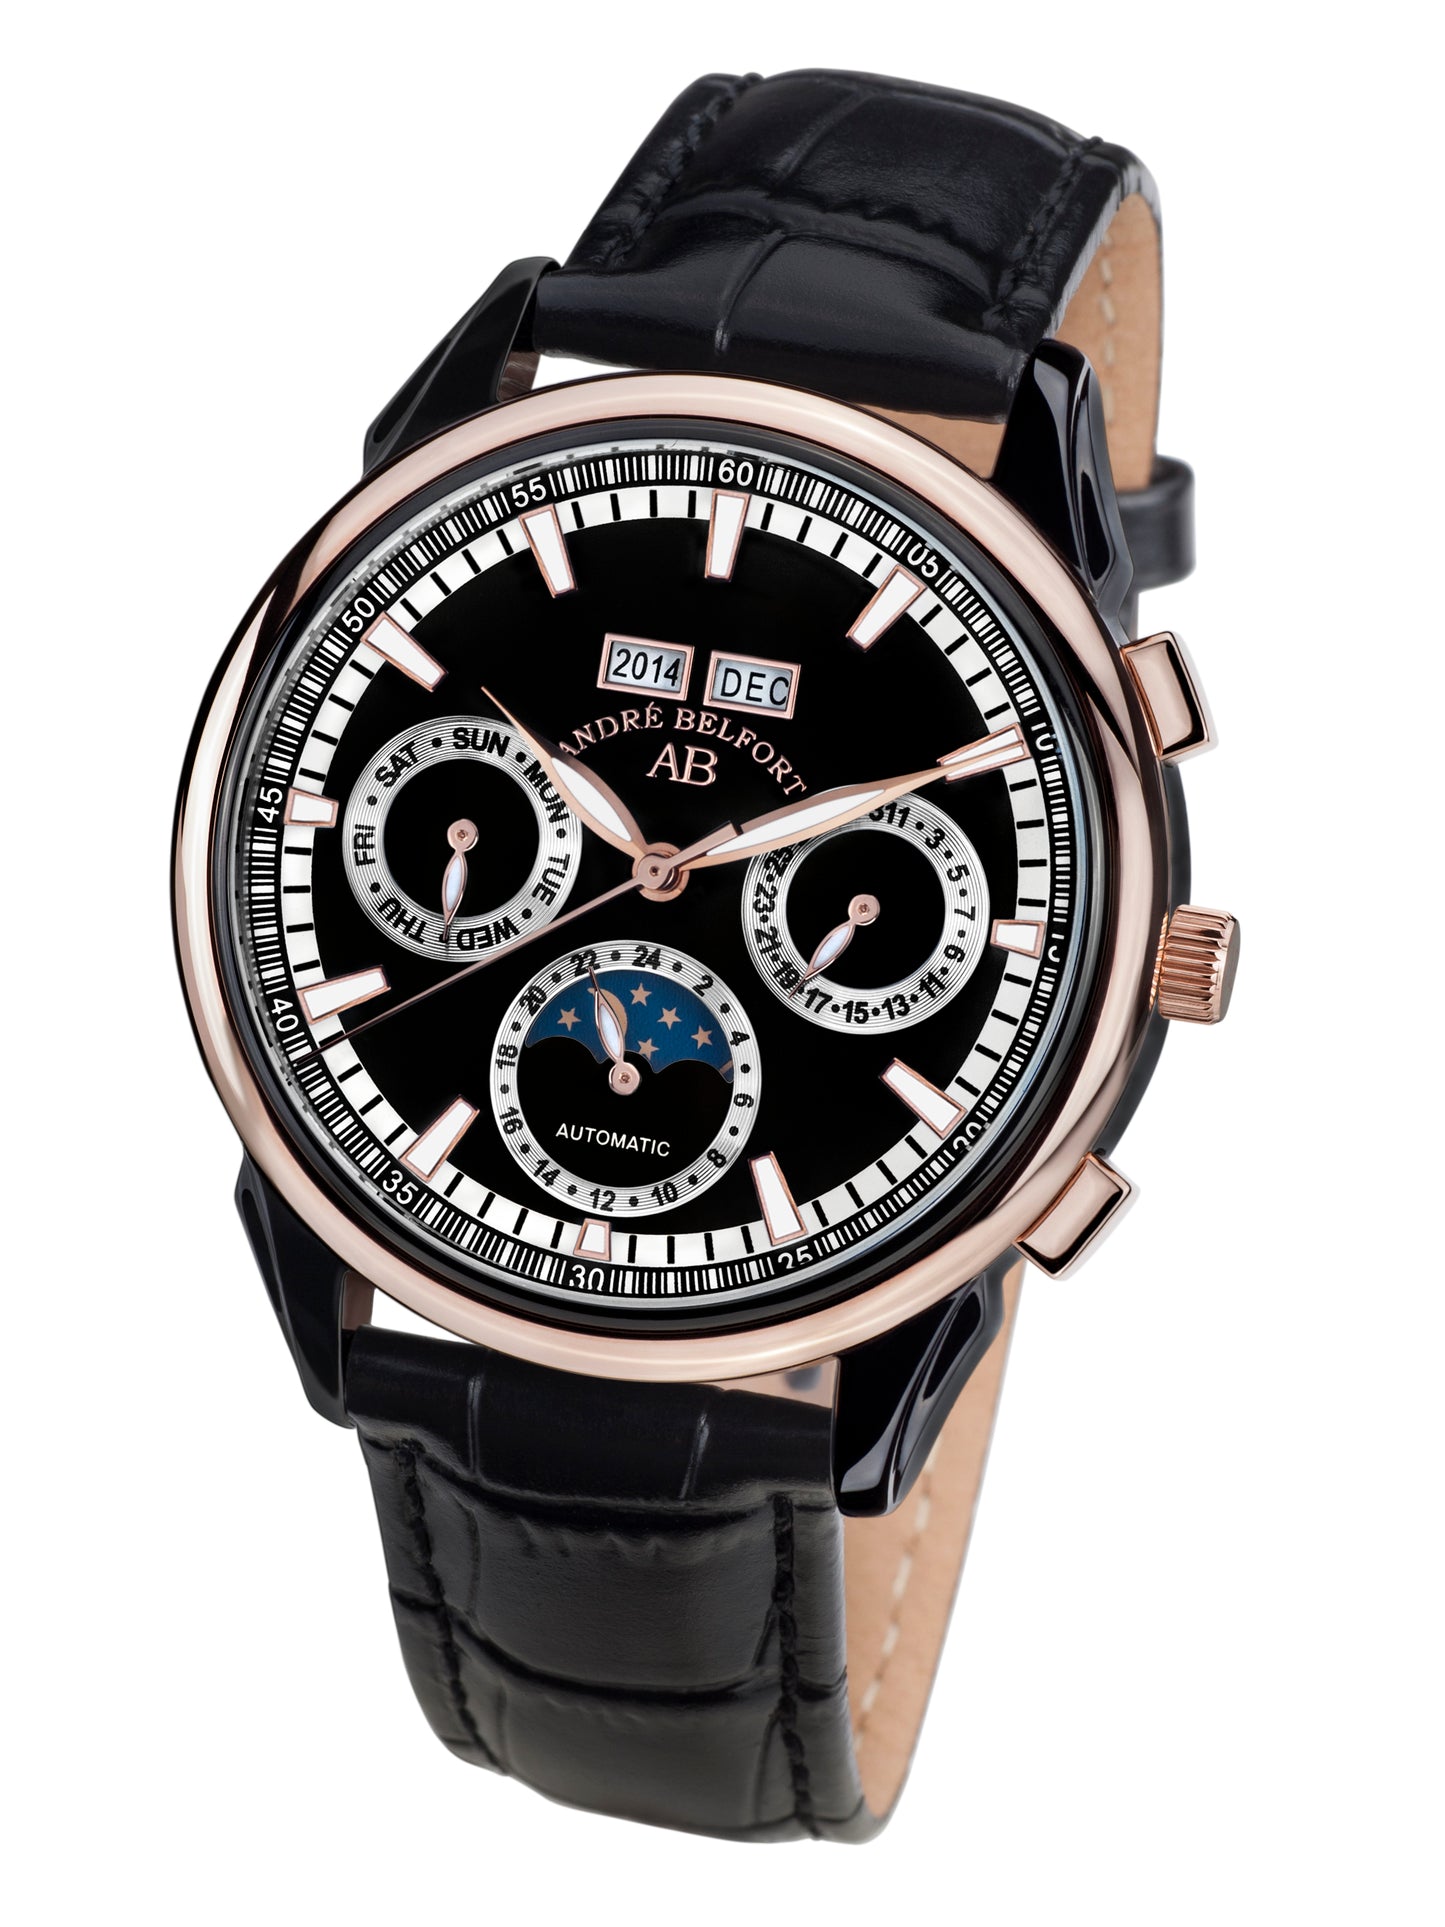 Automatic watches — Ambassadeur — André Belfort — rosegold black